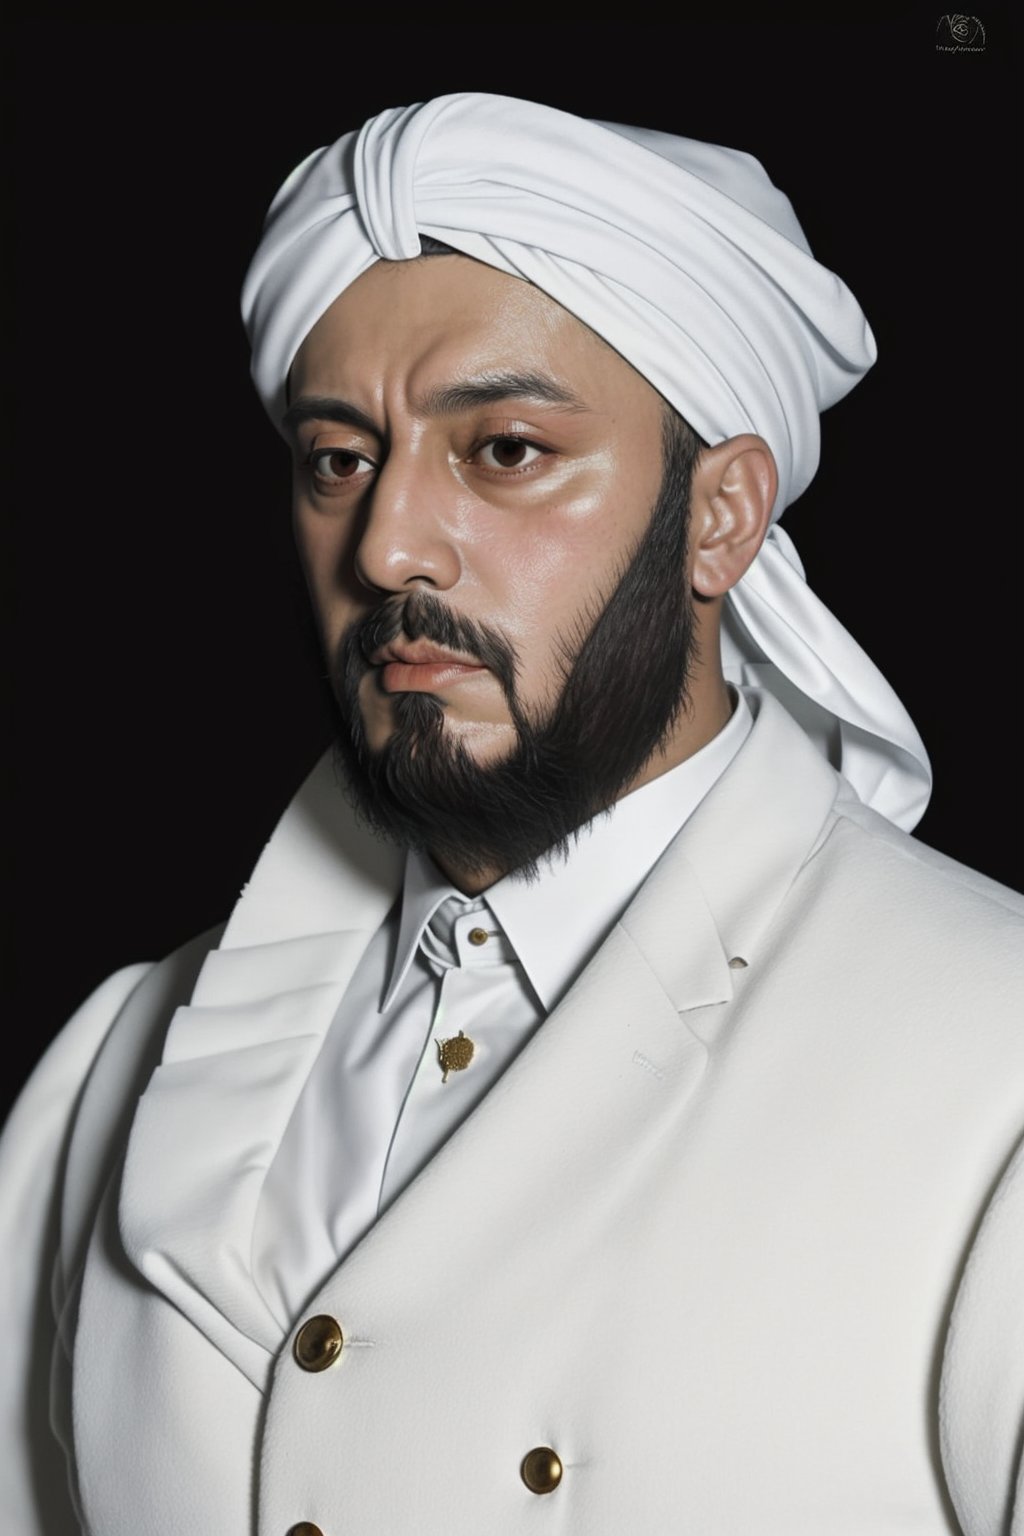 Ottoman sultan, turkish atire, white turban, long beard.